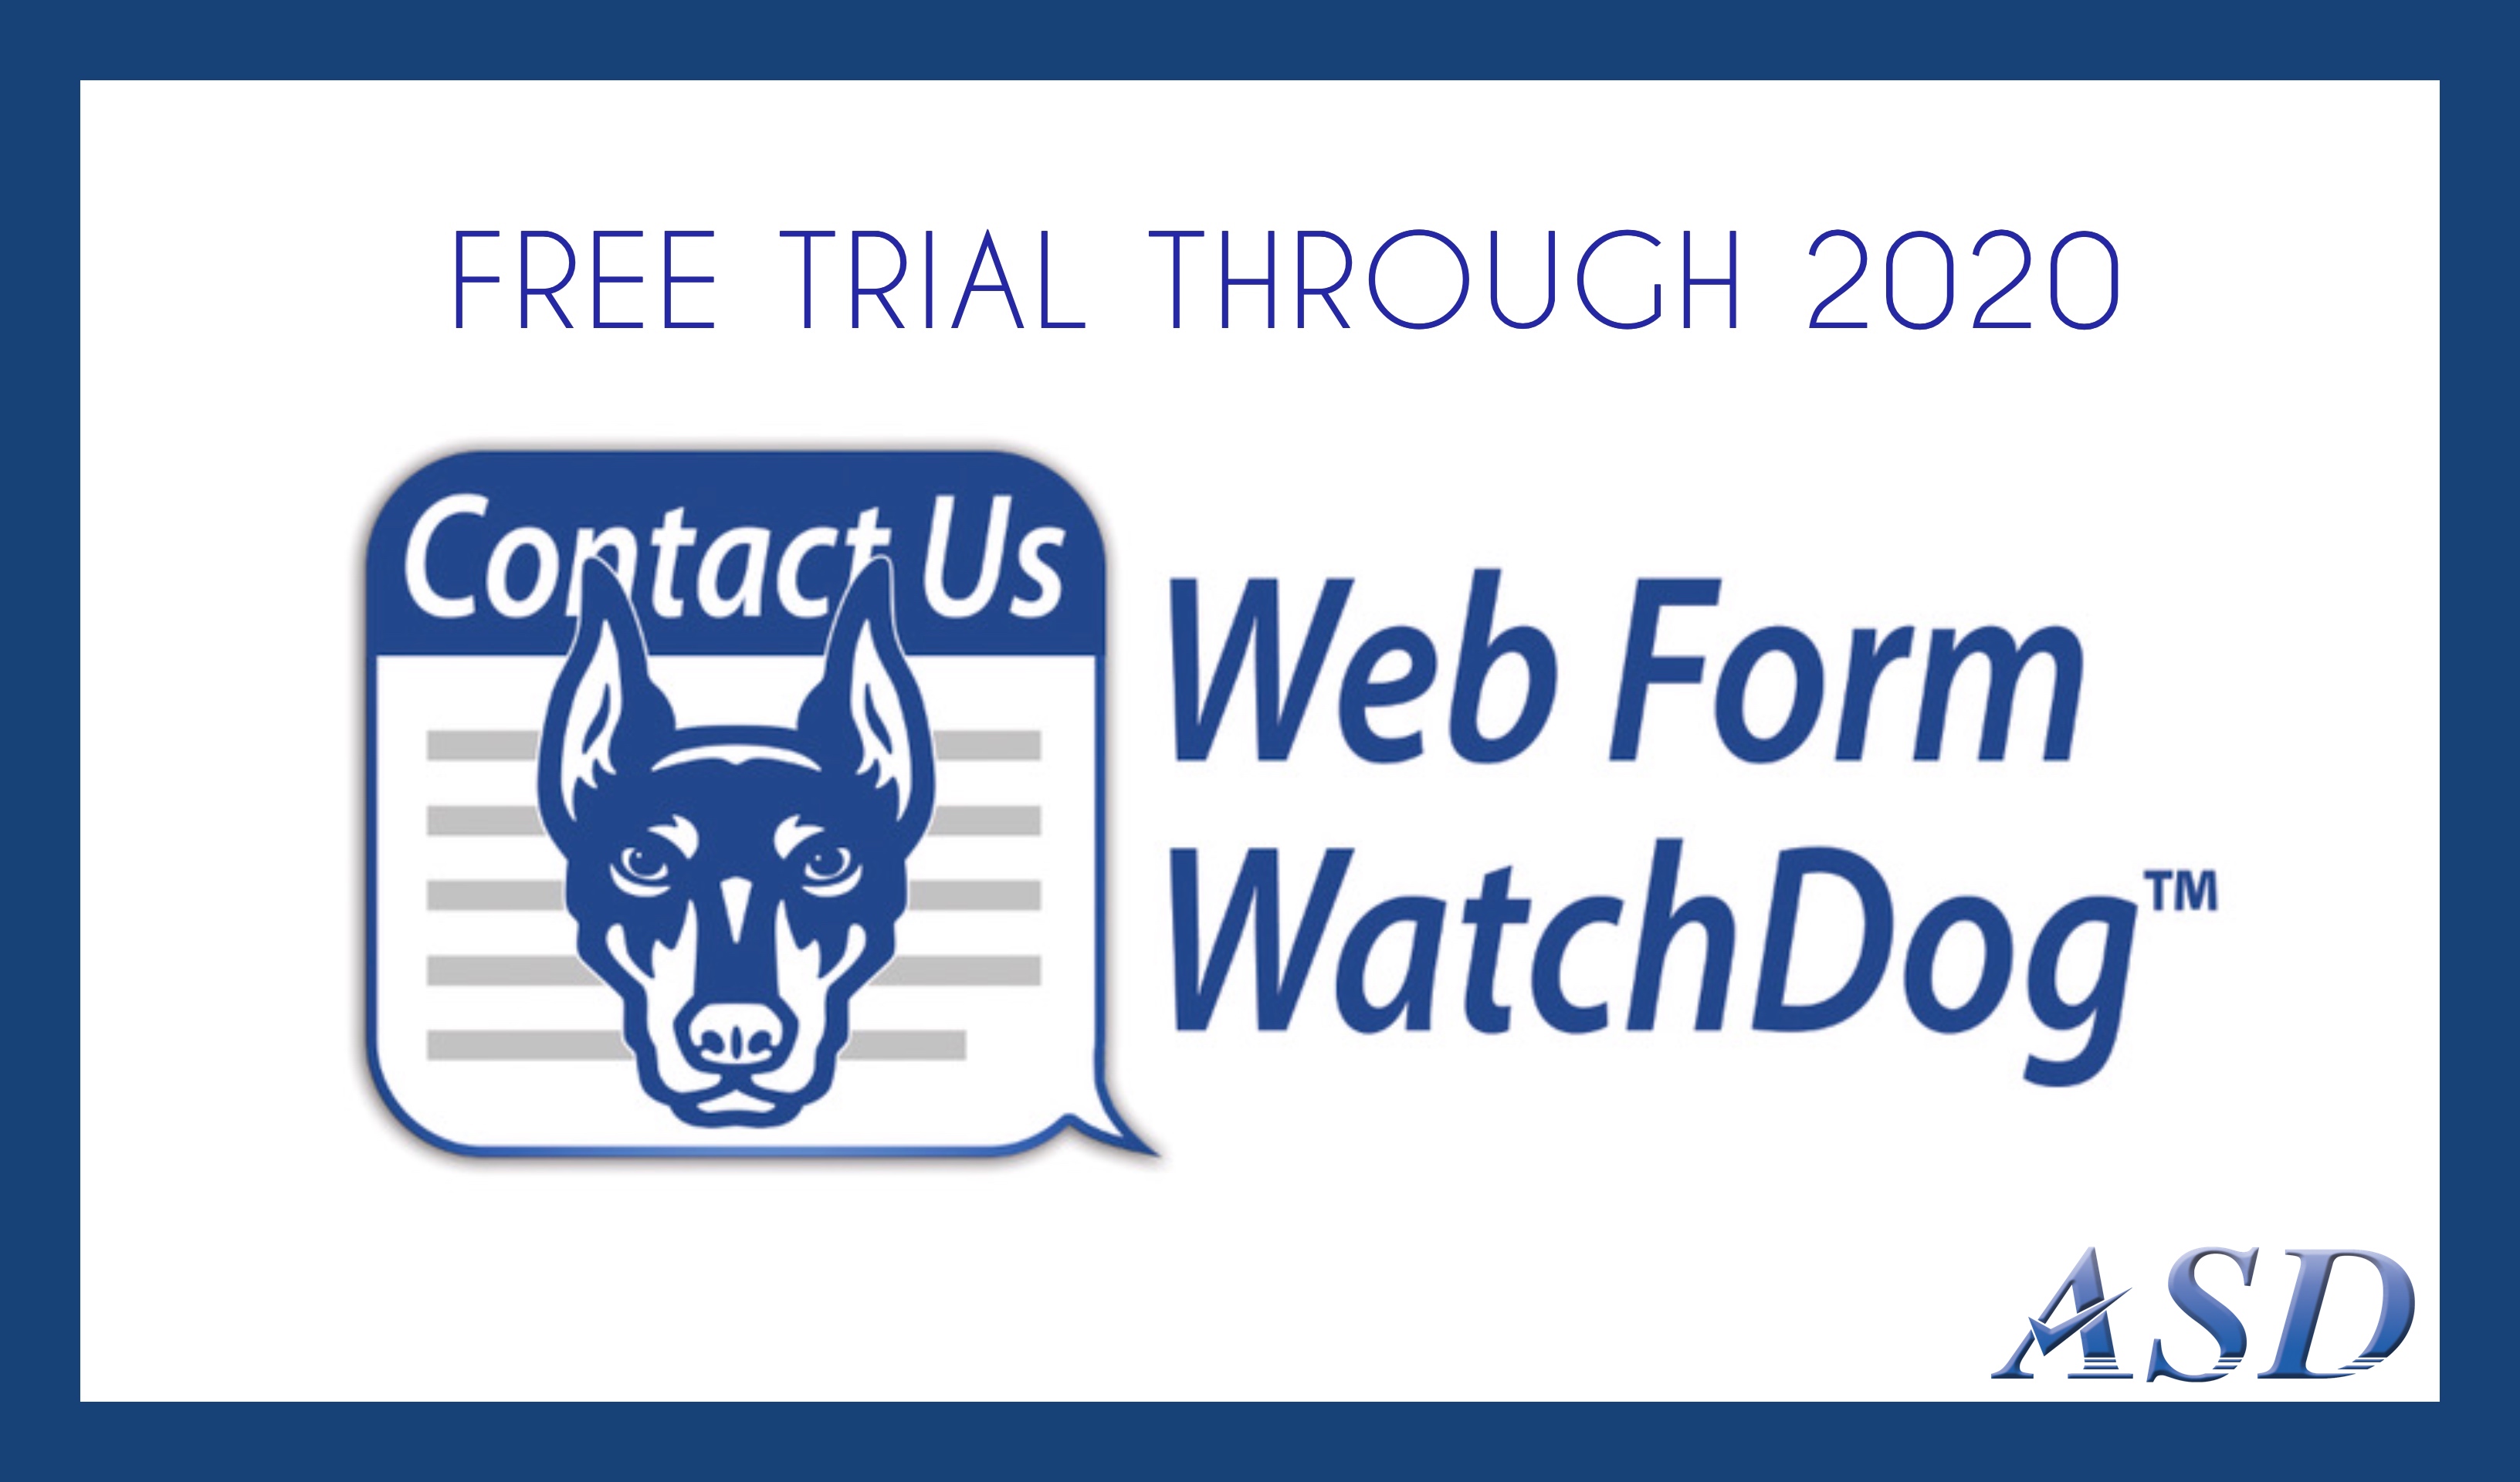 https://www.myasd.com/blog/asd-enhances-nfda-award-winning-web-form-watchdog-feature-and-offers-free-trial-funeral-homes-through-2020